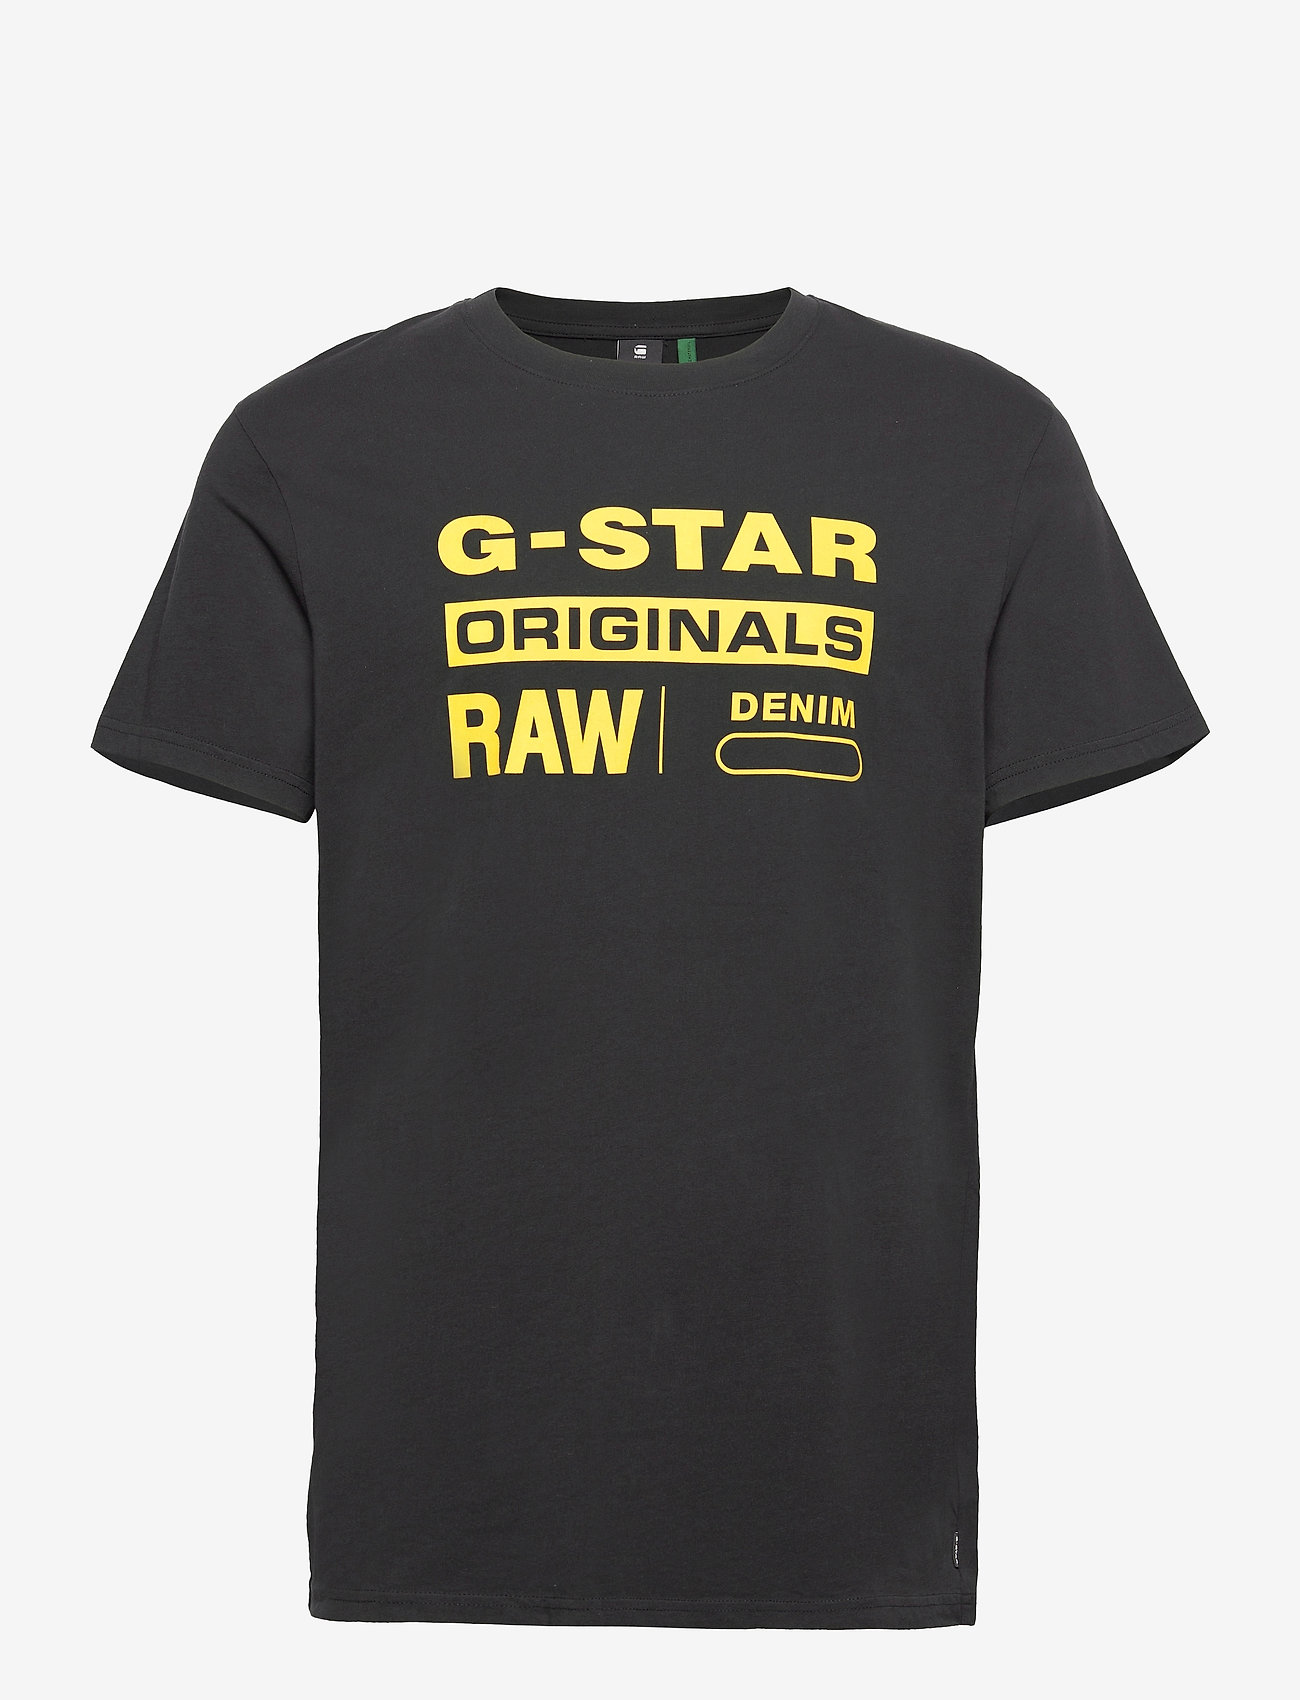 G-Star RAW - Graphic 8 r t s\s - lägsta priserna - dk black - 0